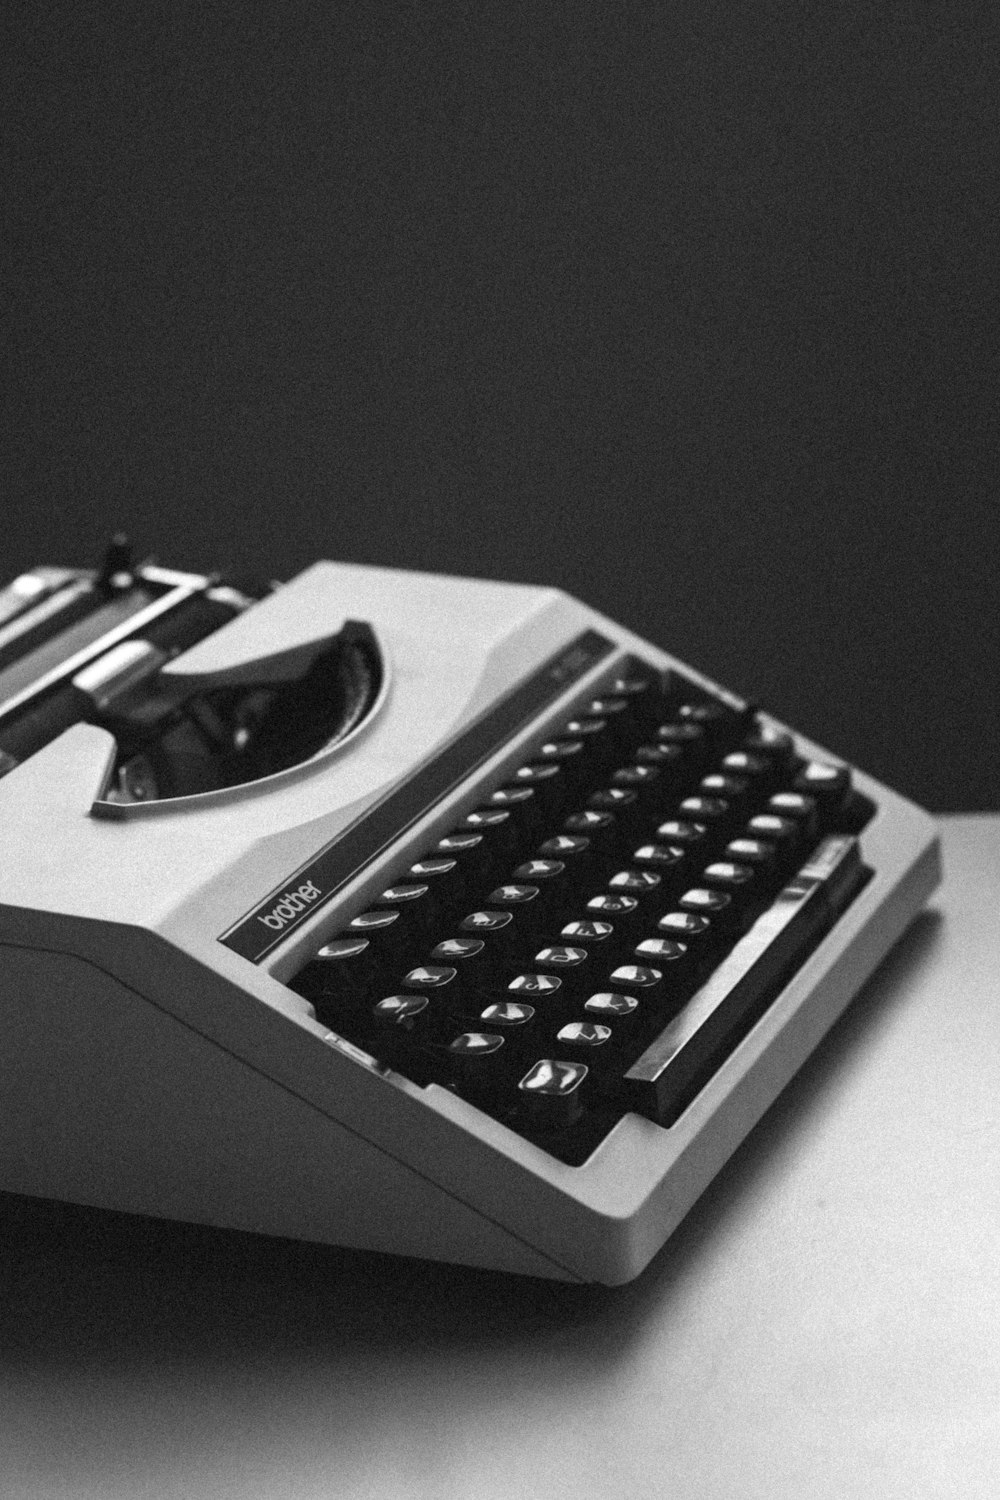 white and black typewriter close-up photography